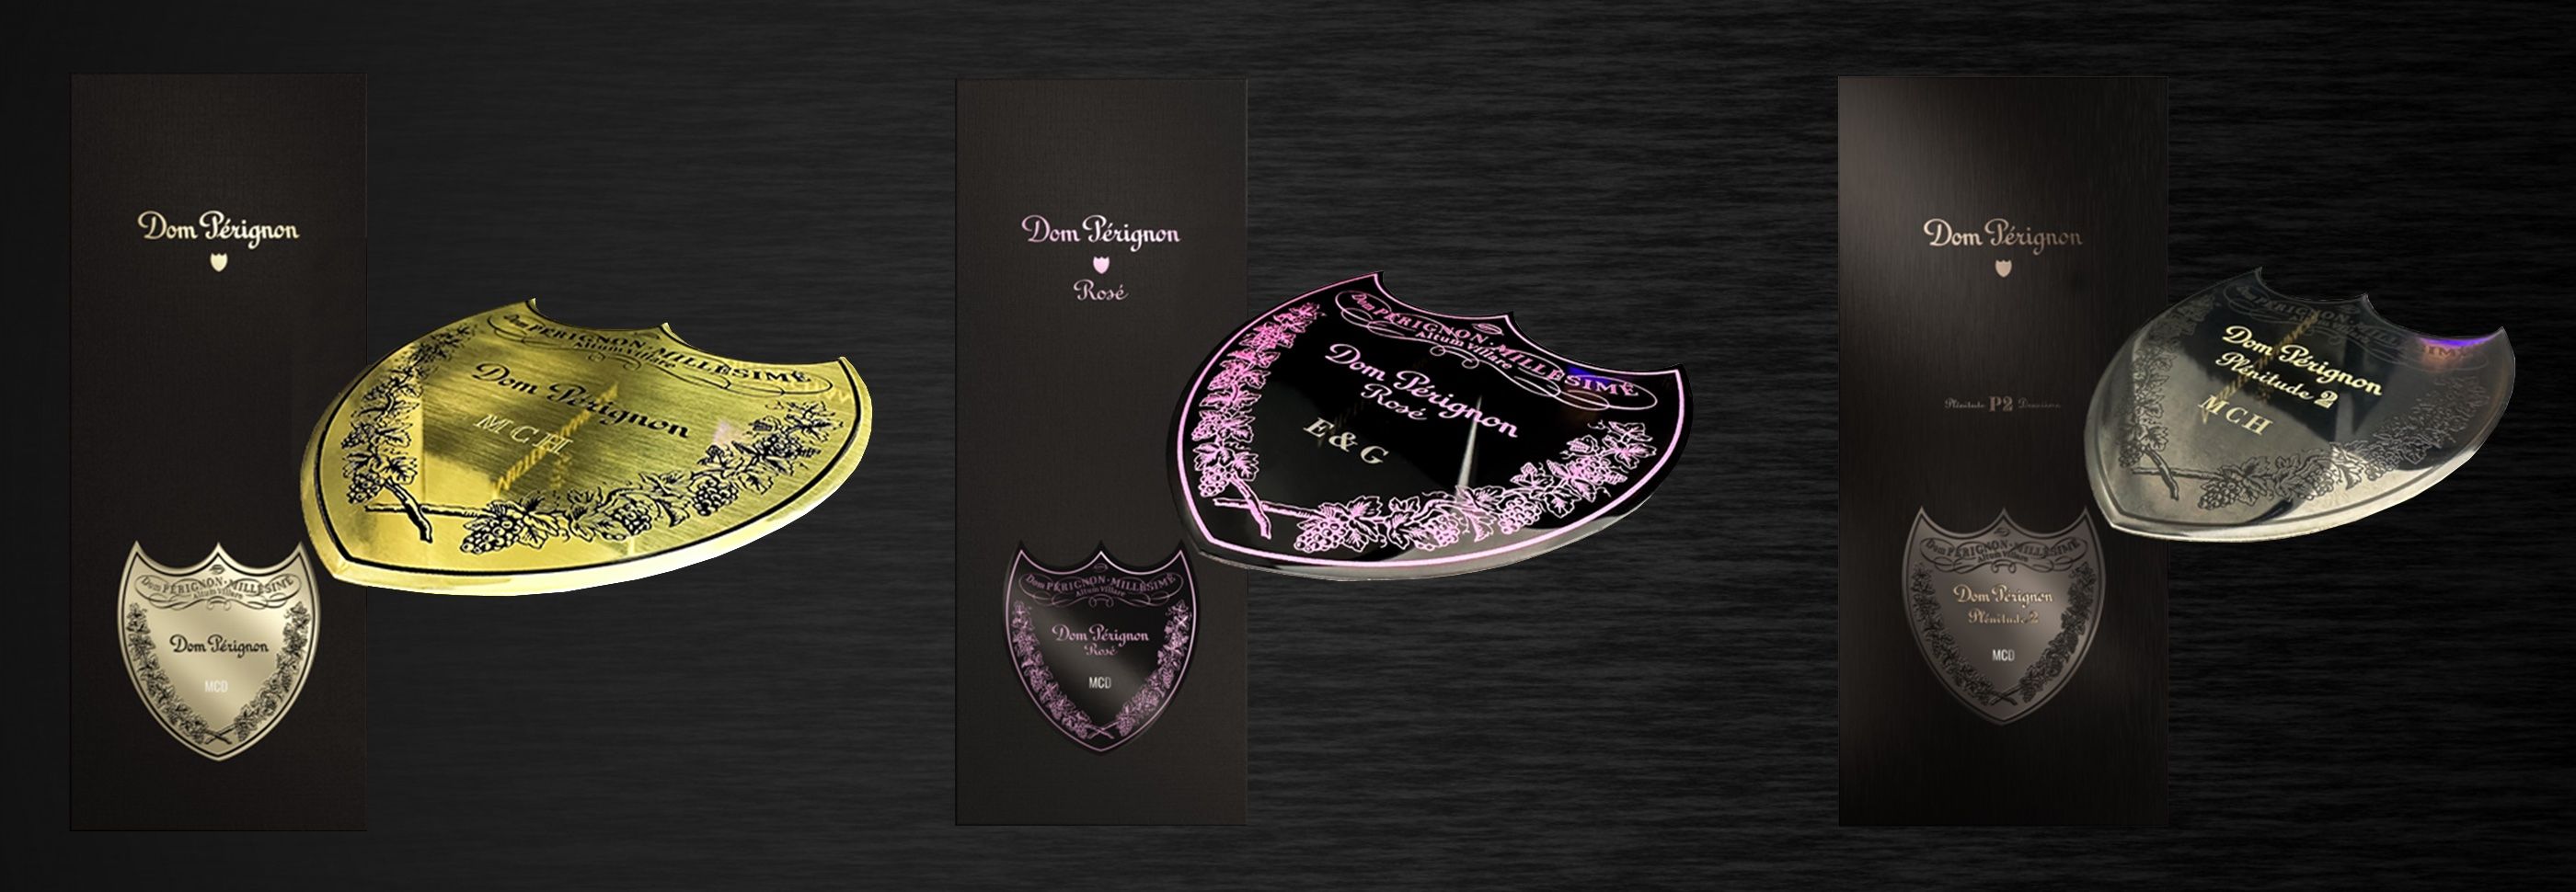 Personalize your Dom Pérignon box